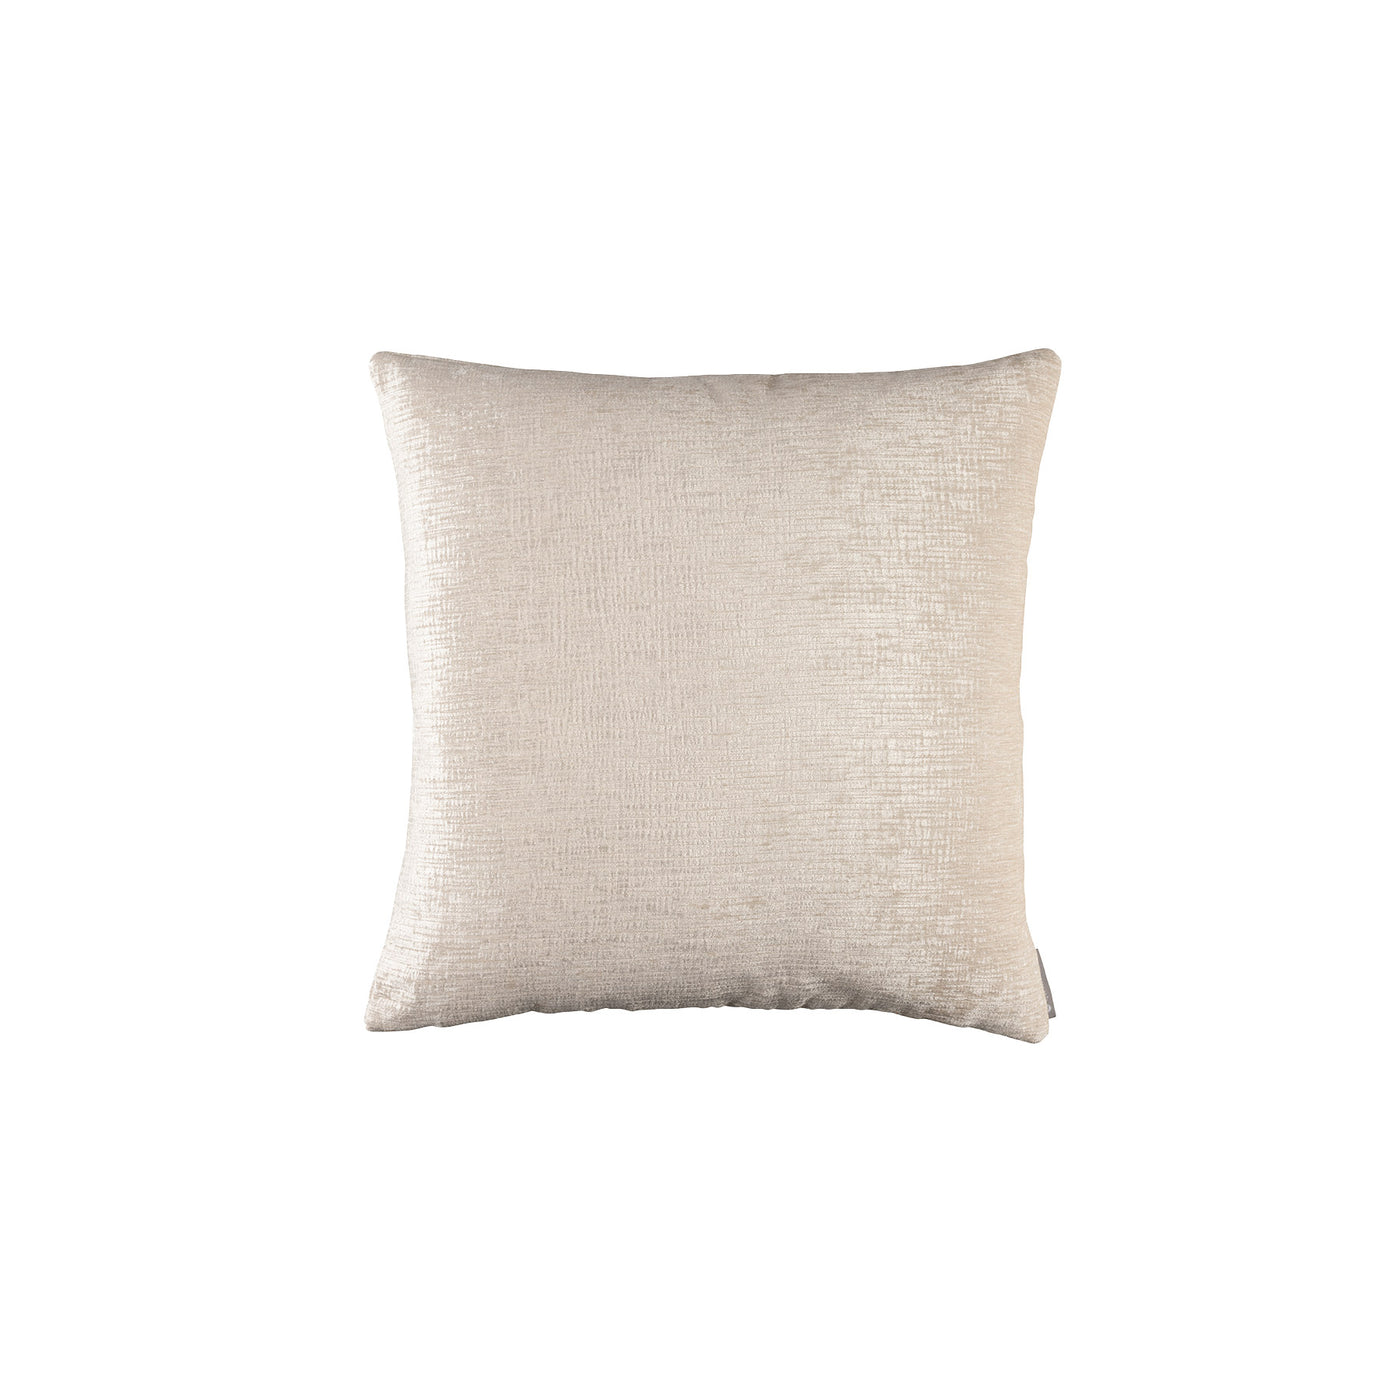 Ava Ivory Euro Pillow (26x26)